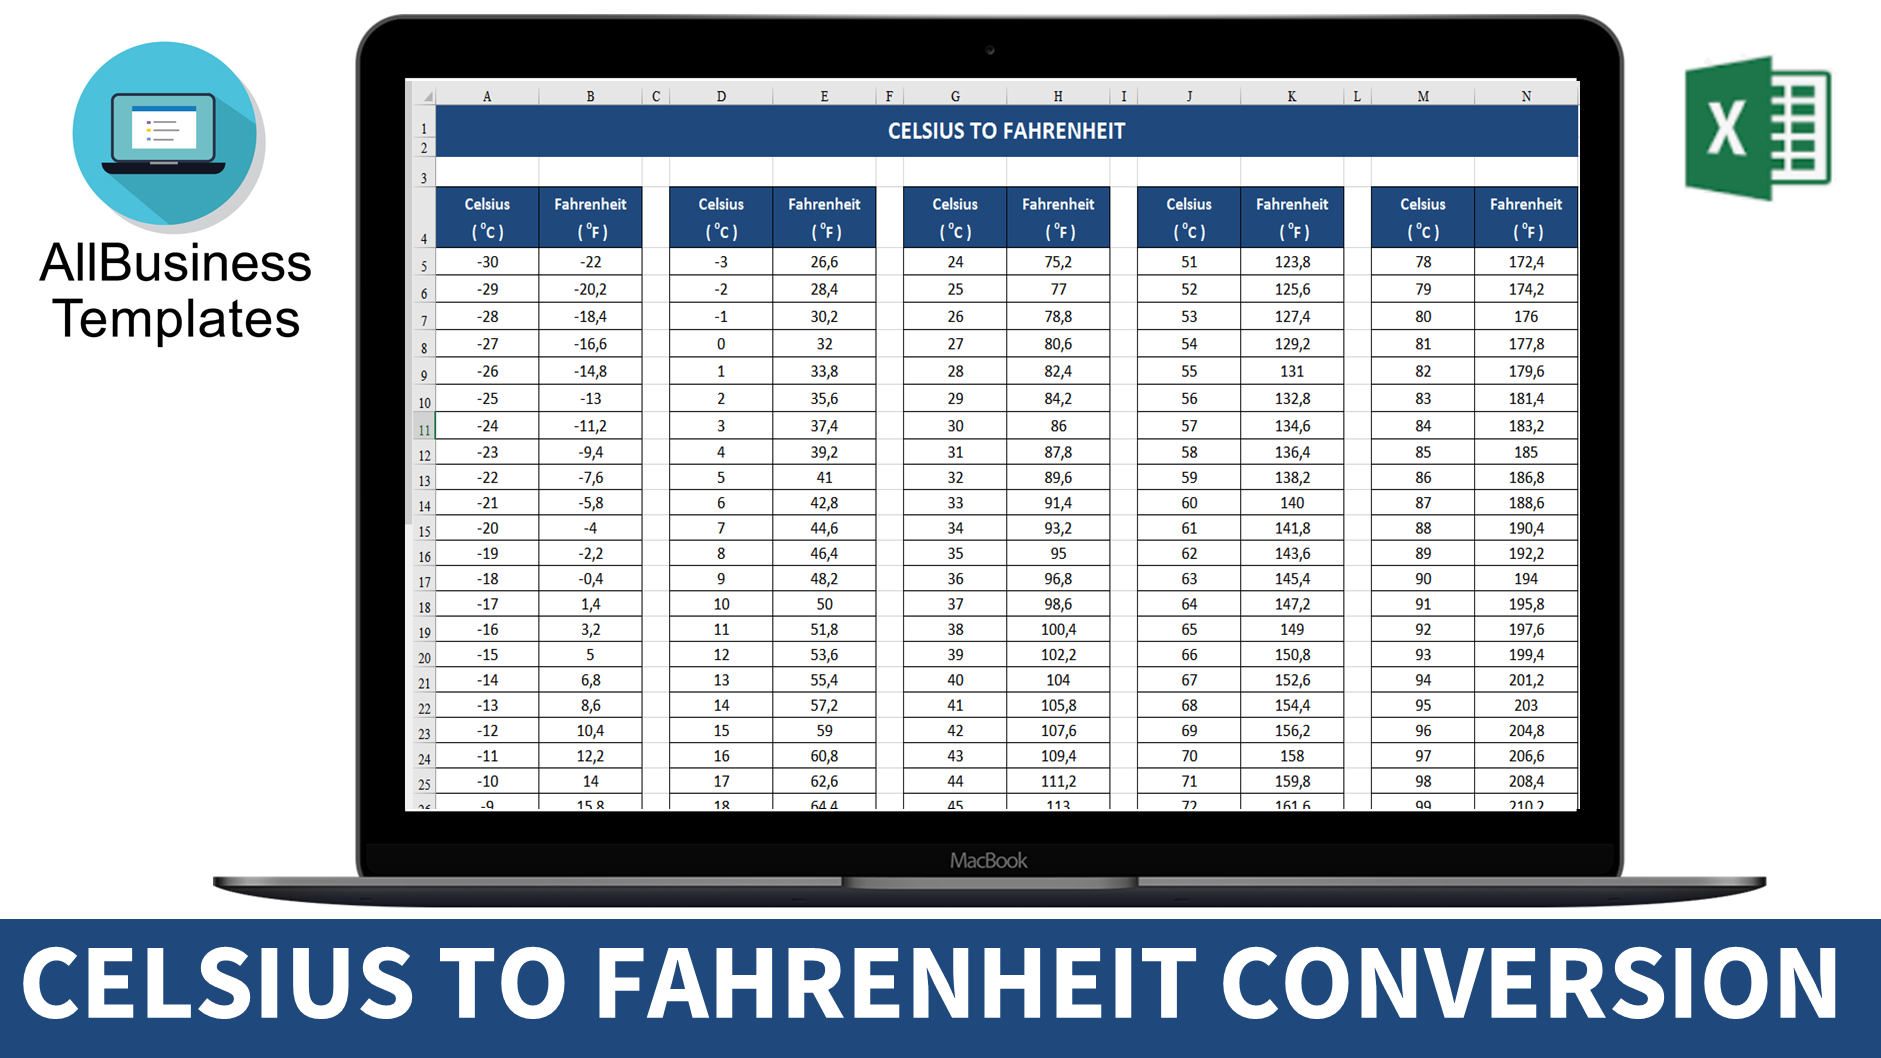 Celsius to Fahrenheit conversion chart main image